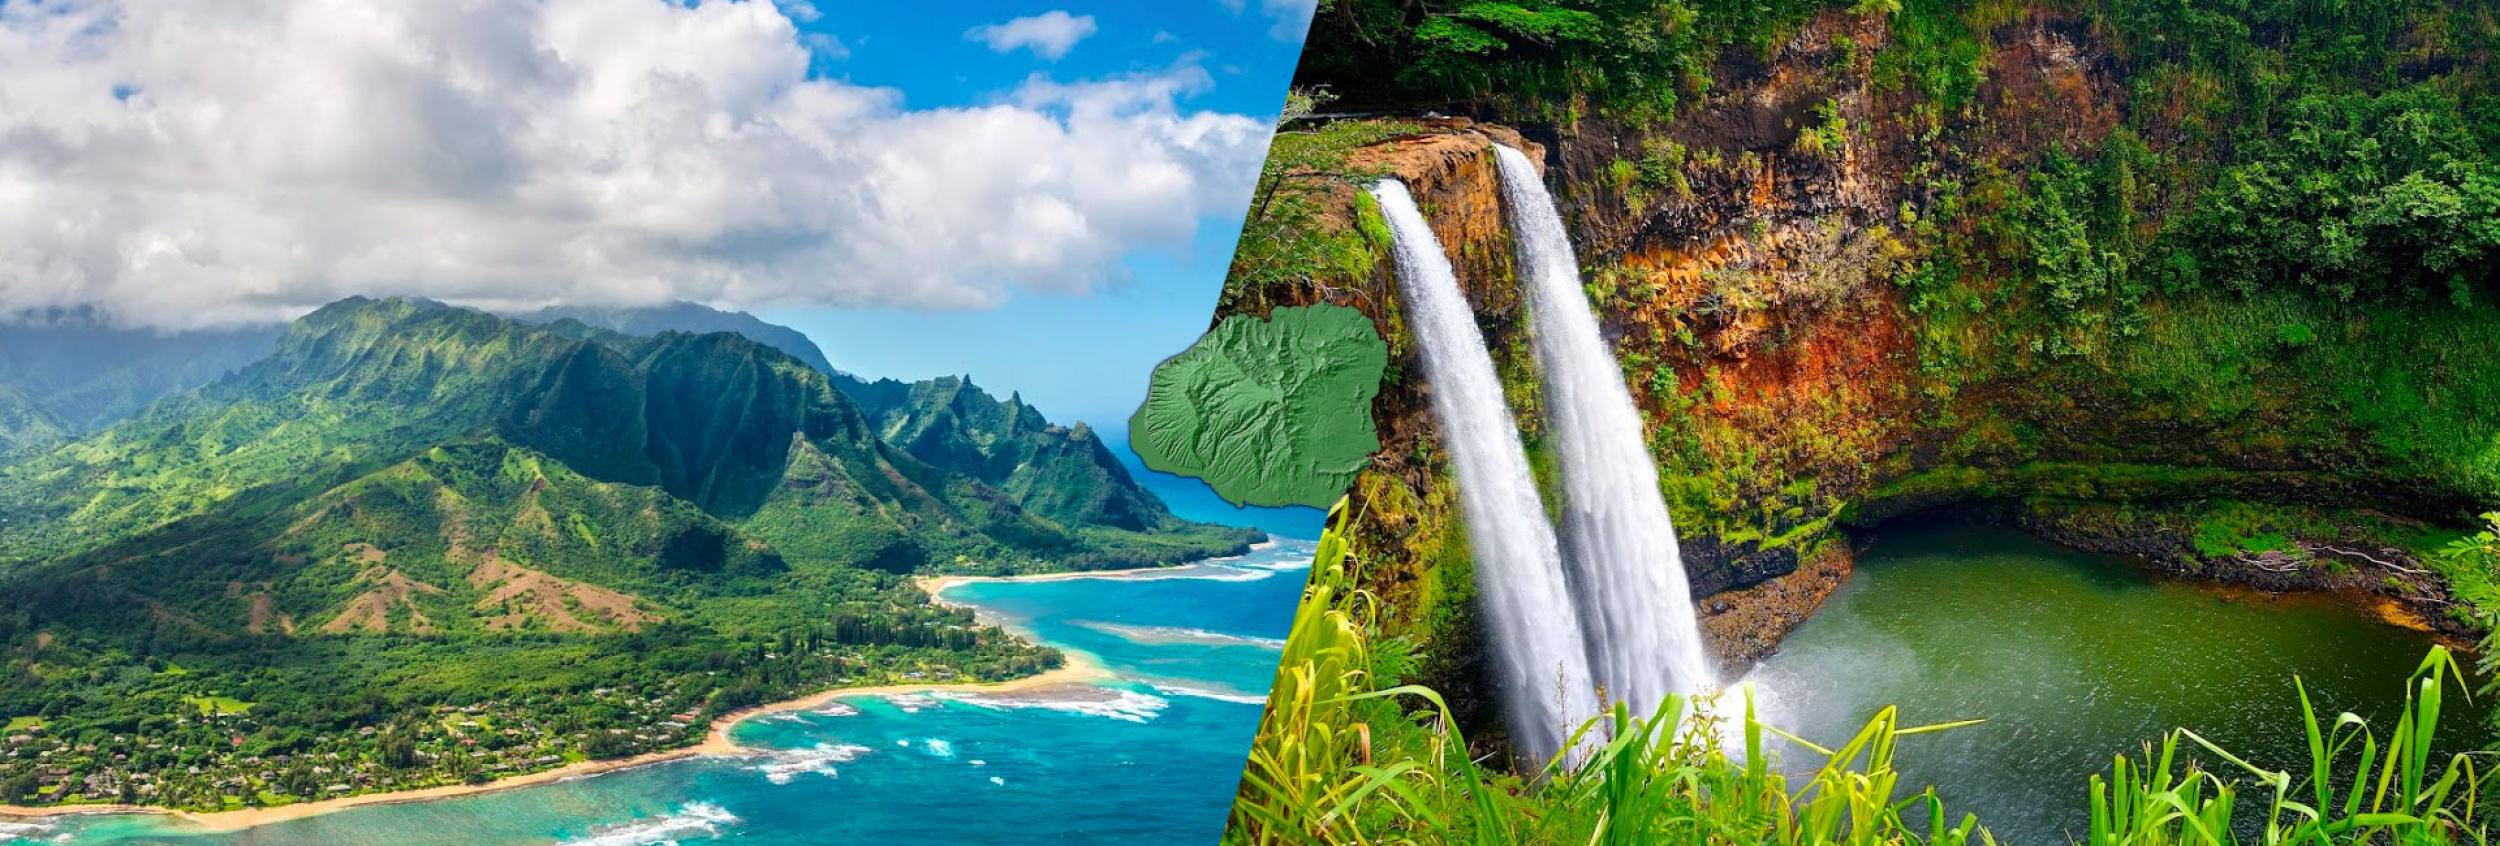 Cámara Interior Madurar Kauai Hawaii Travel Guide: Top Things to See & Do